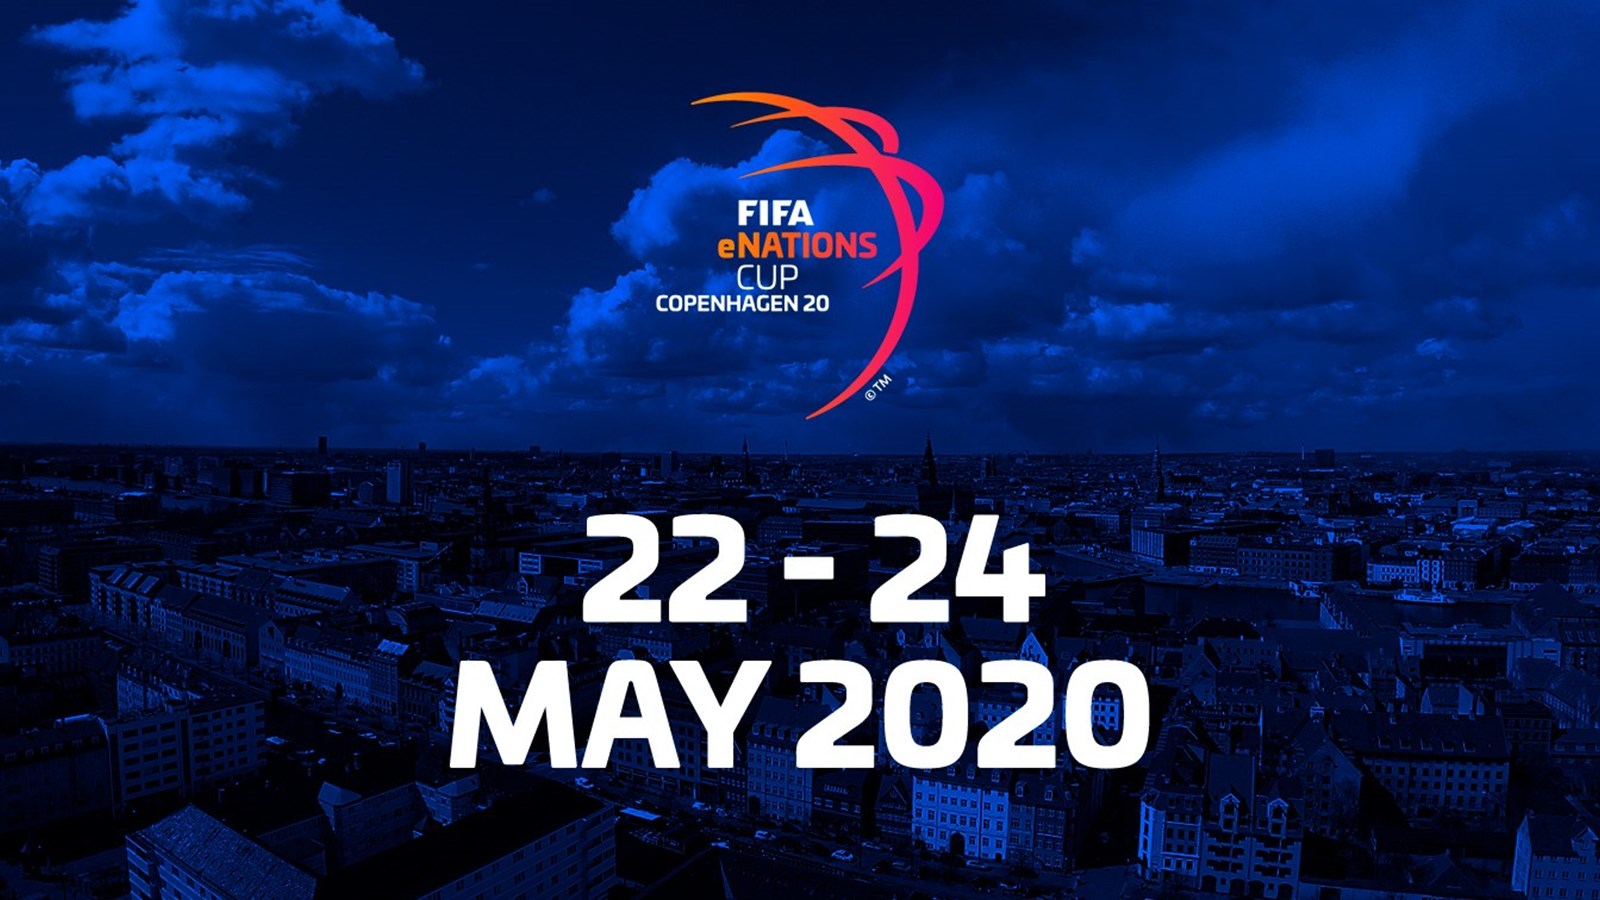 Danmark skal være vært for FIFA eNations Cup 2020